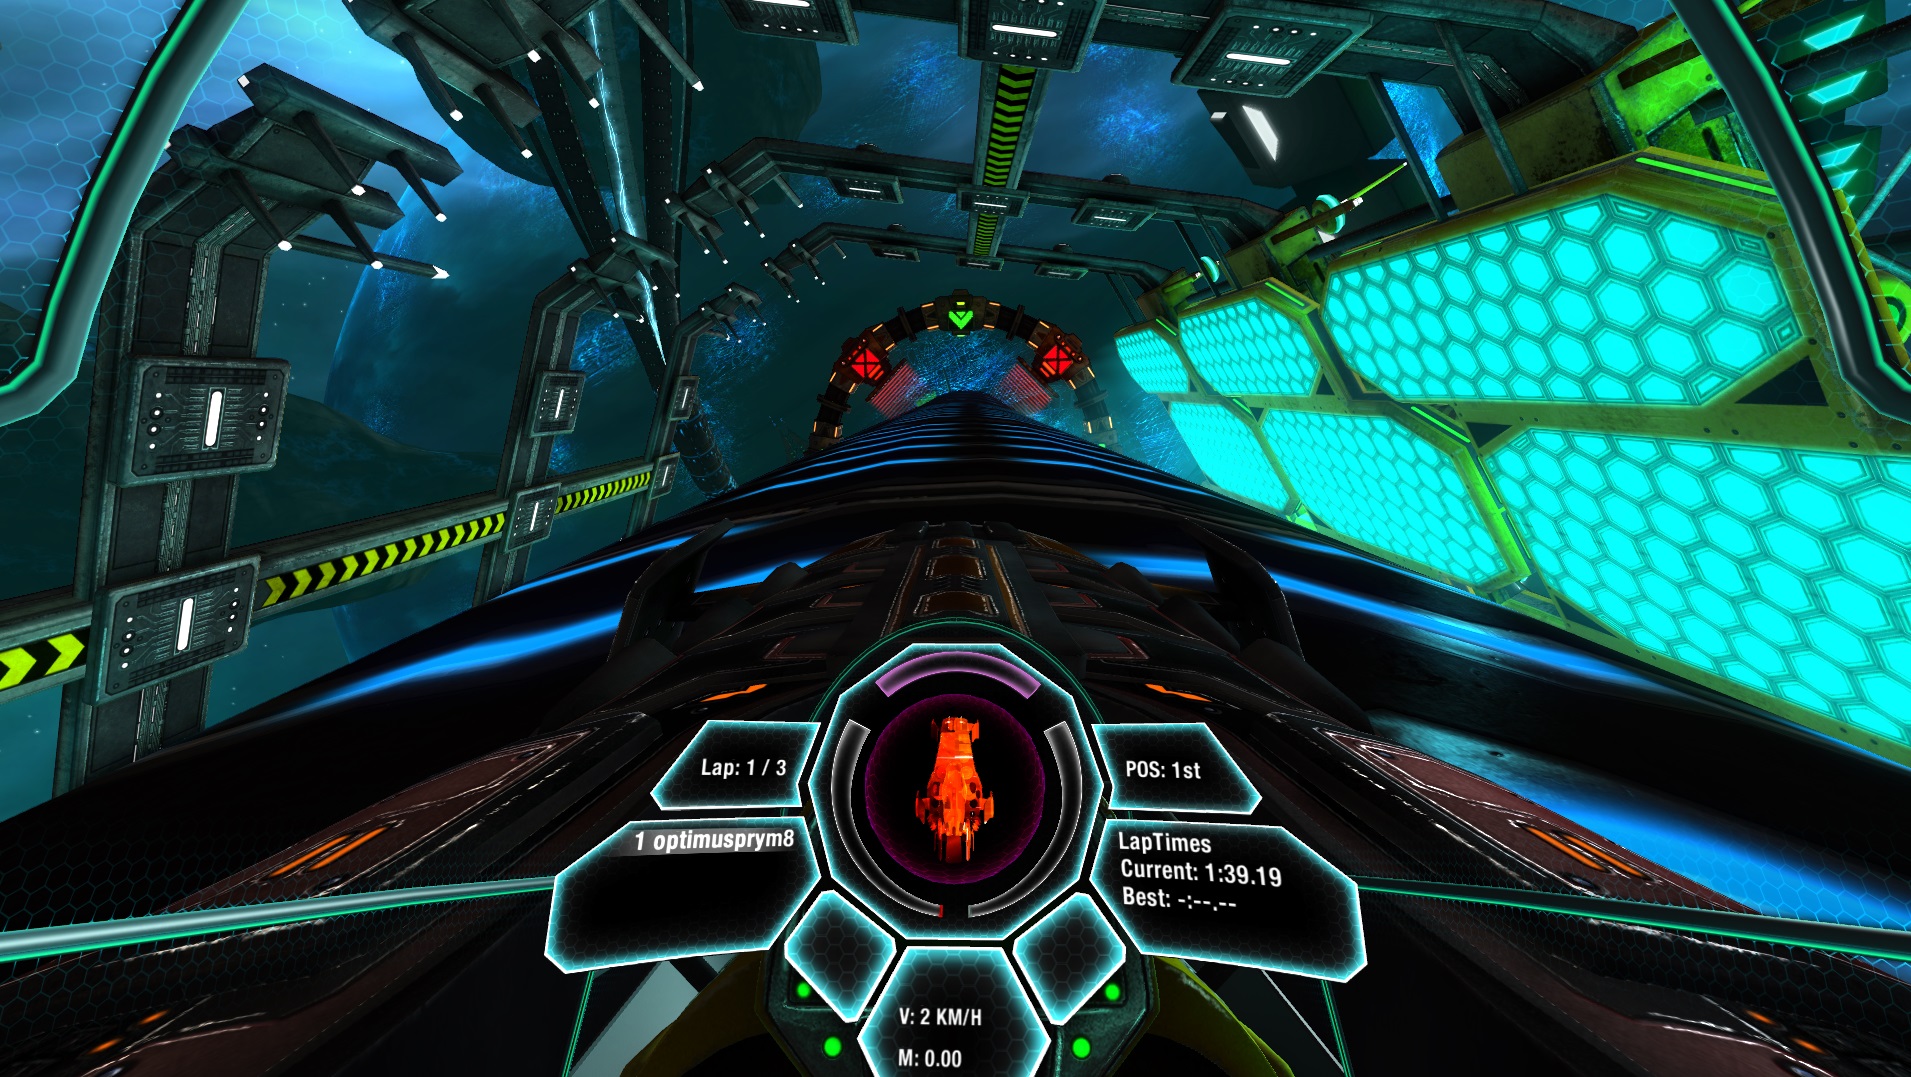 Captura de pantalla - Radial-G: Racing Revolved (PC)